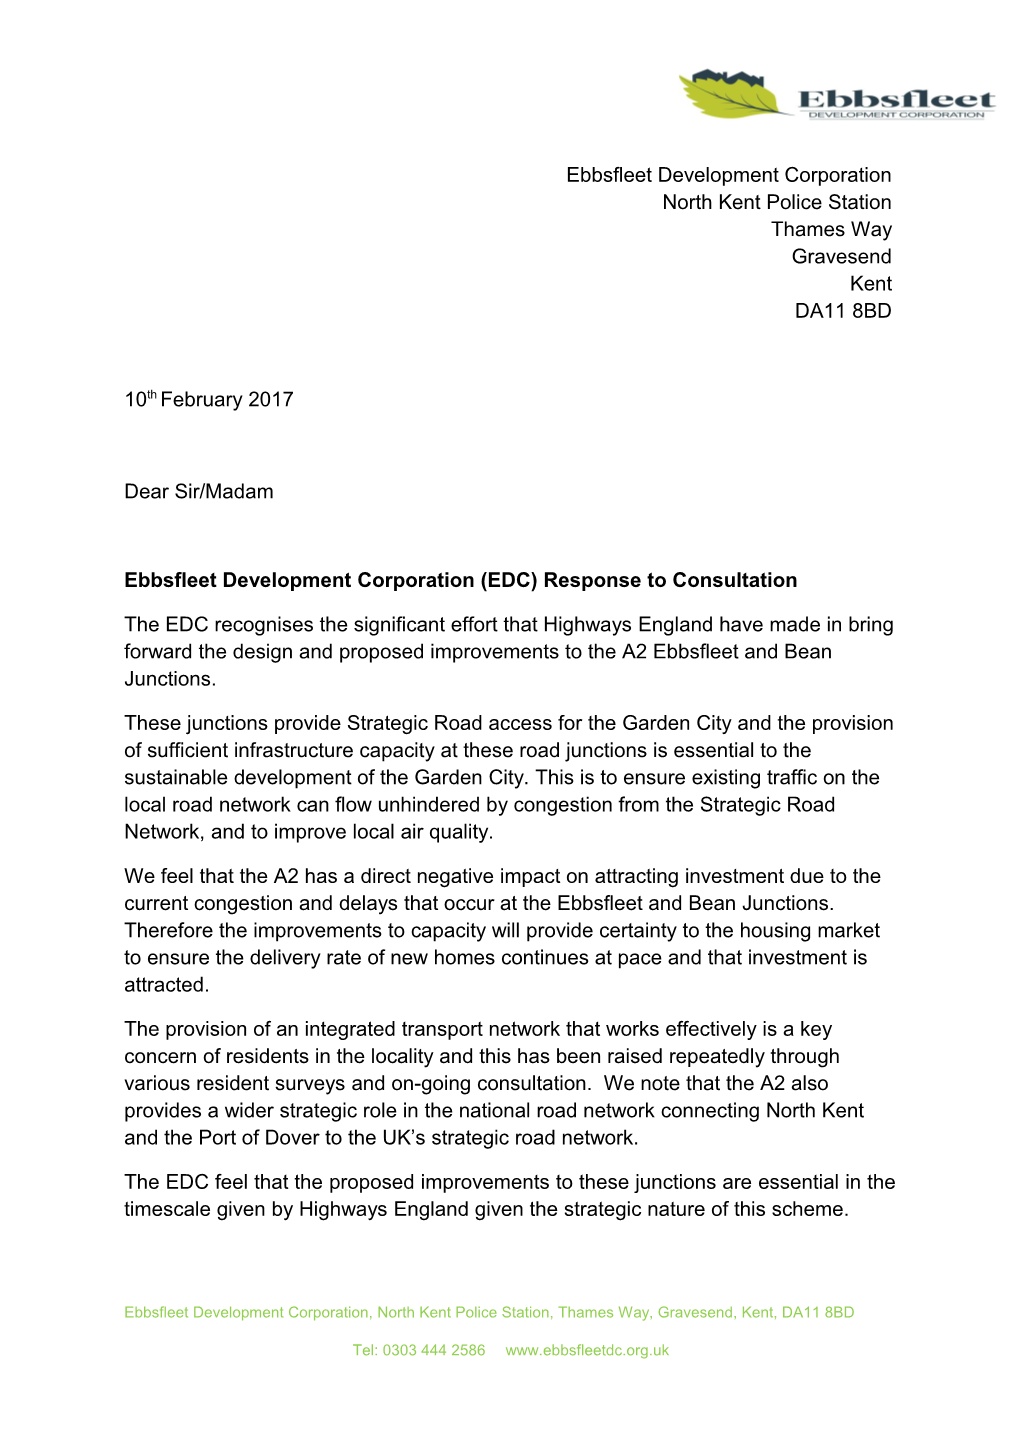 Ebbsfleet Development Corporation (EDC) Response to Consultation